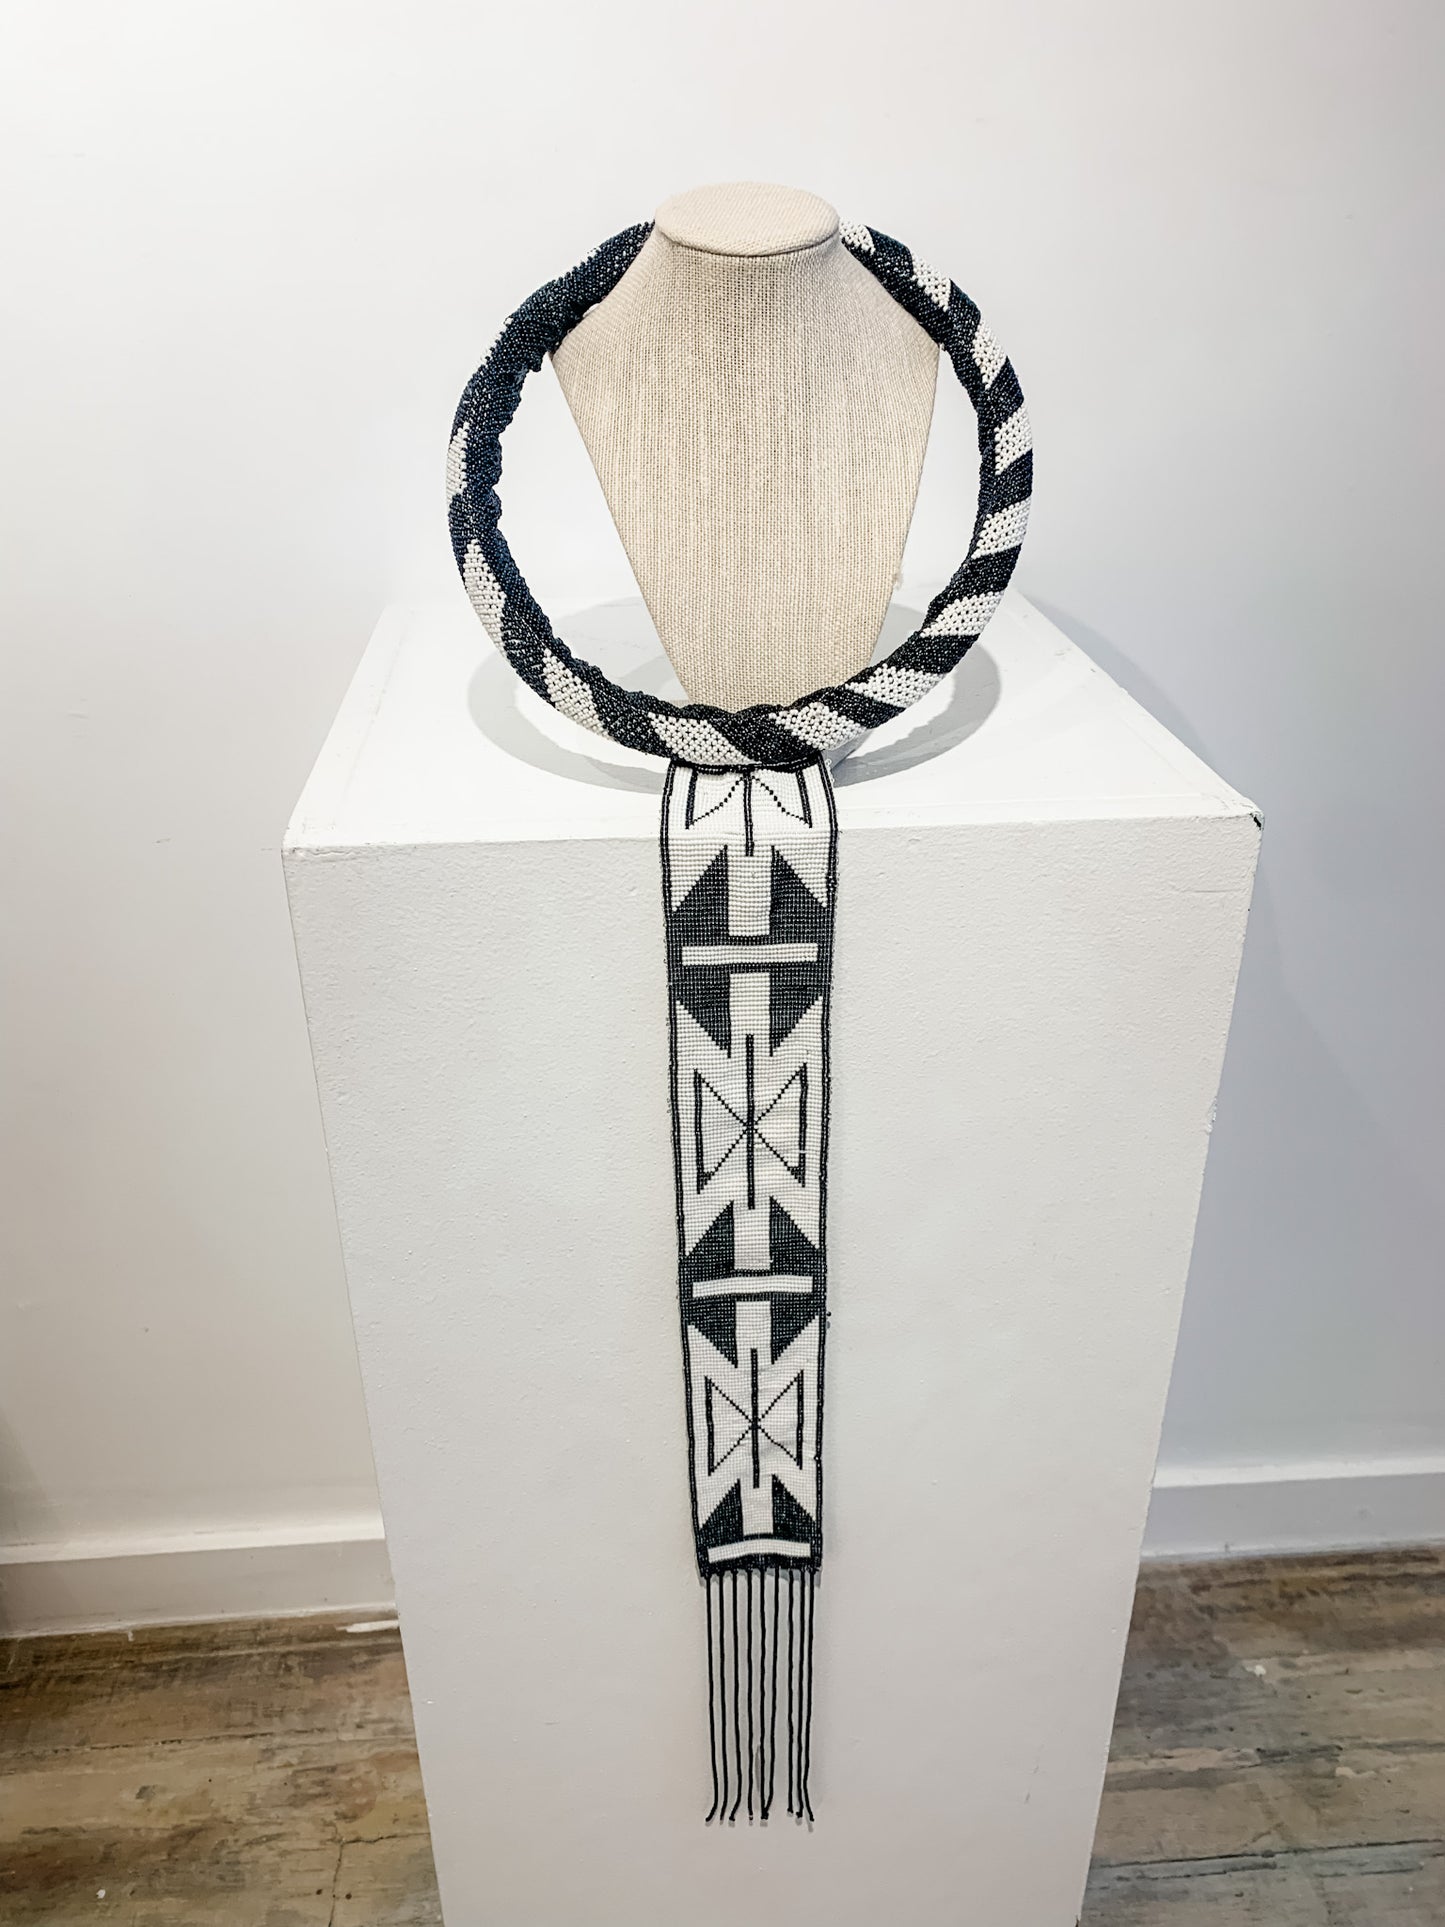 Maasai Warrior Necklace, Black & White